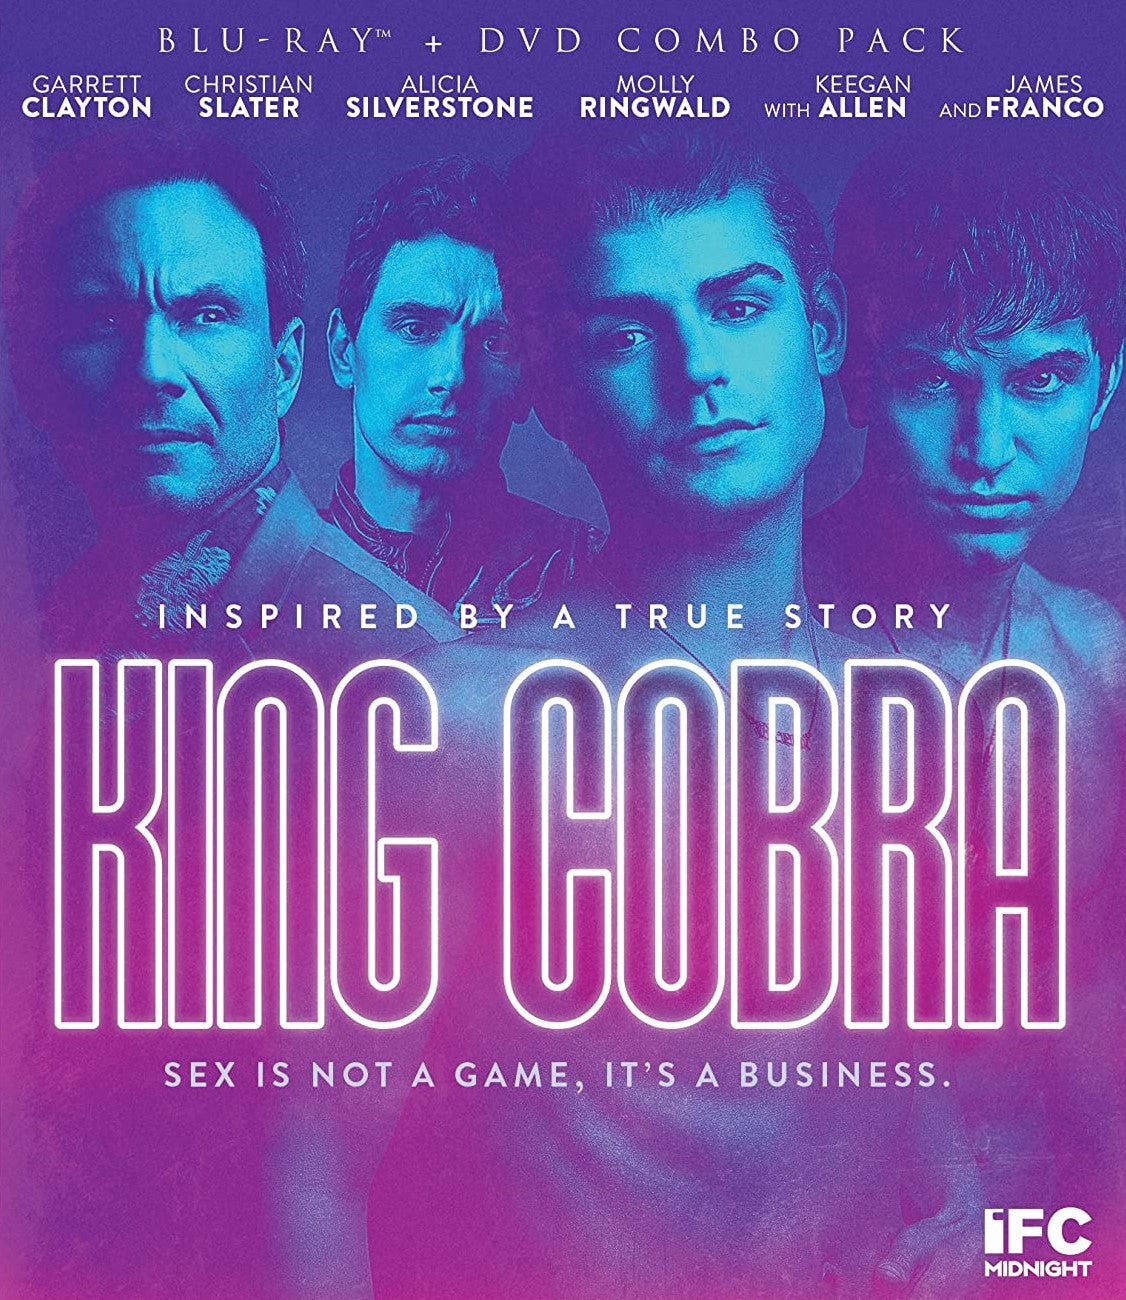 KING COBRA BLU-RAY/DVD